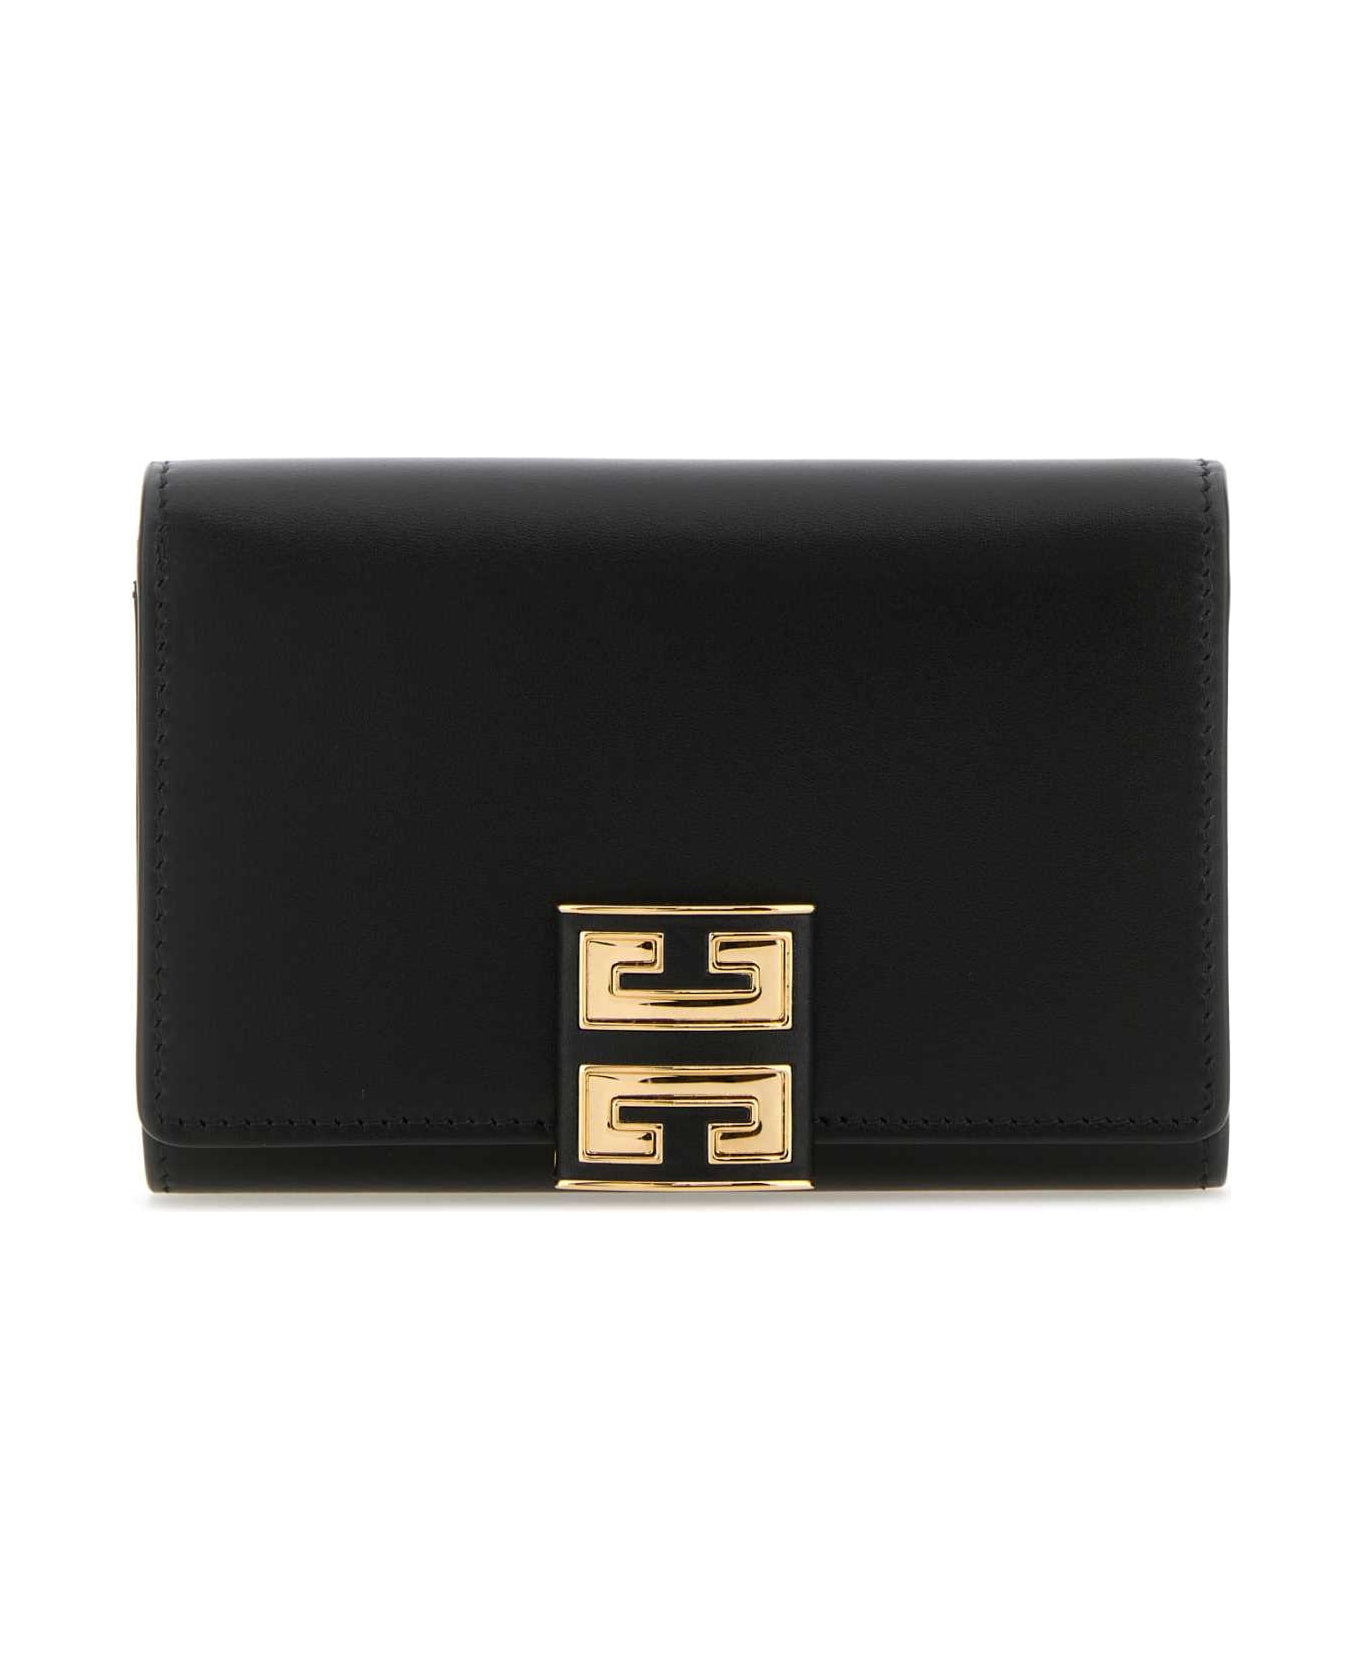 Givenchy Black Leather 4g Wallet - BLACK